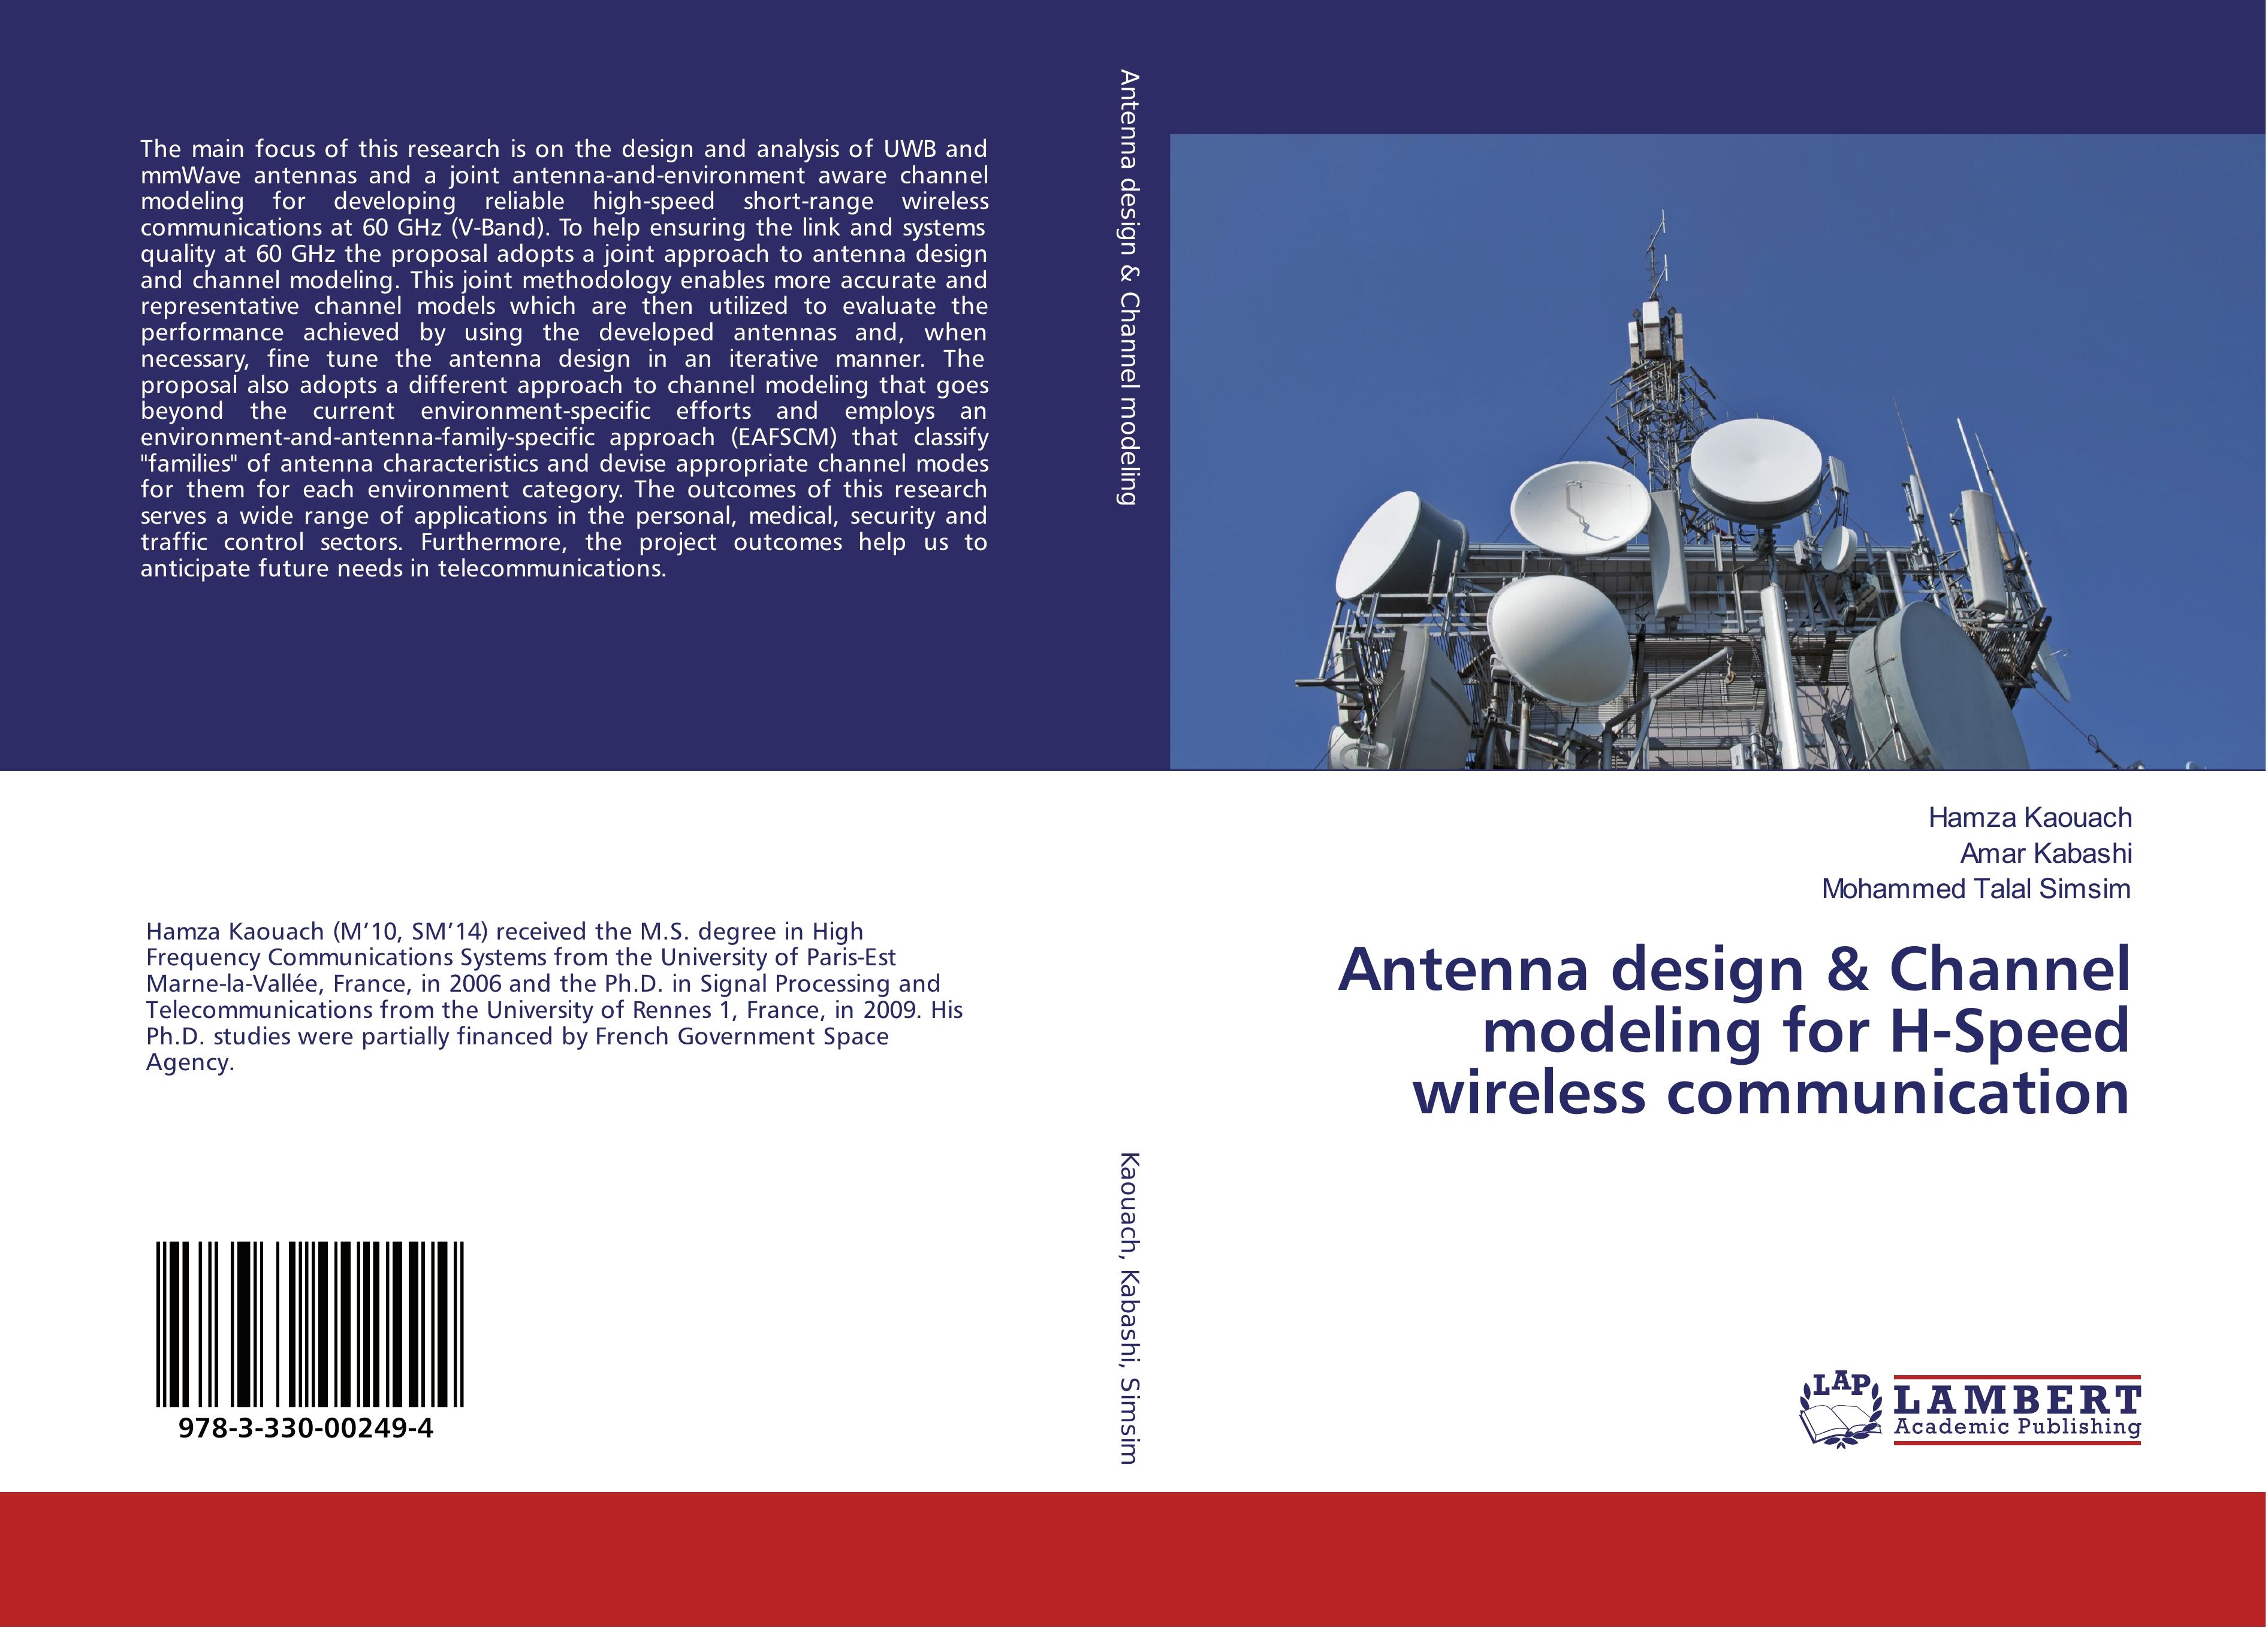 Antenna design & Channel modeling for H-Speed wireless communication - Hamza KAOUACH Amar Kabashi Mohammed Talal Simsim